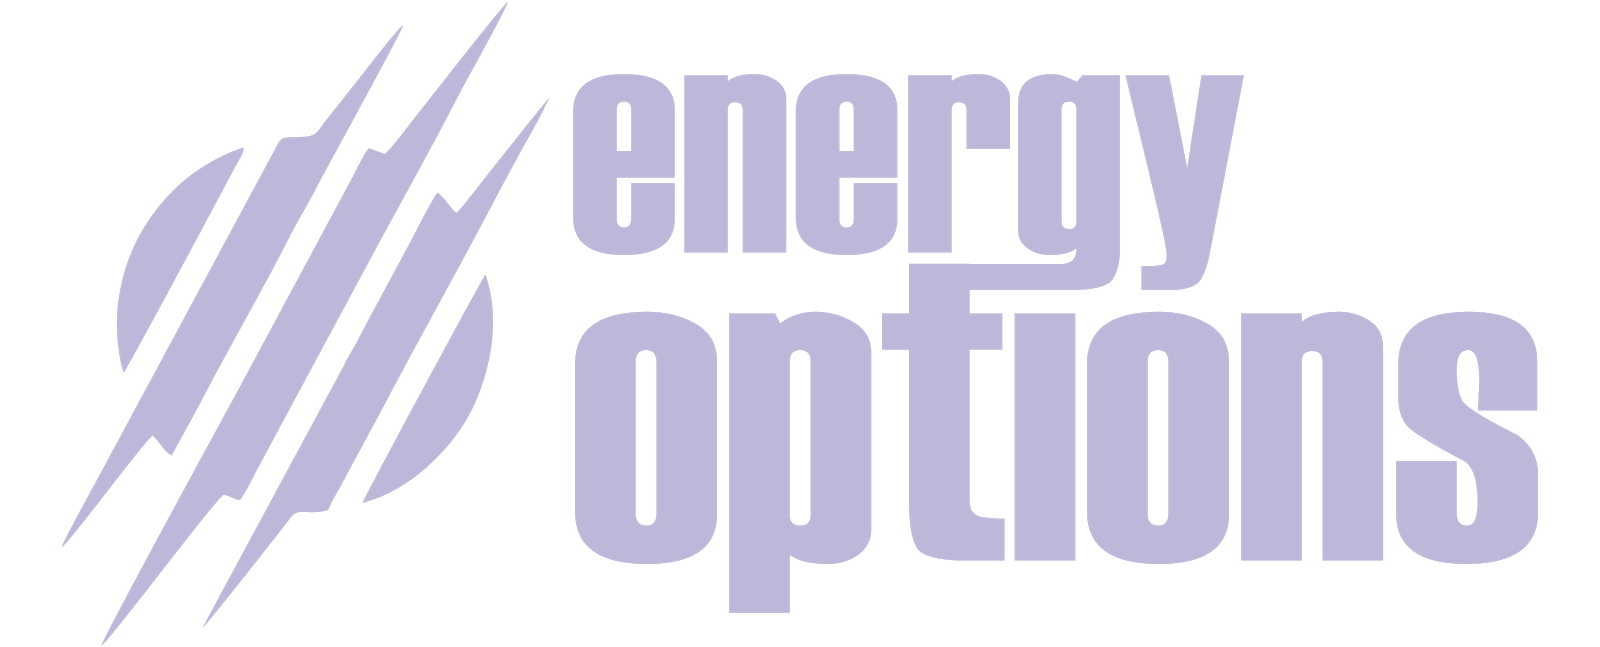 Energy Options Inc - Solar Power Solutions in Zimbabwe.